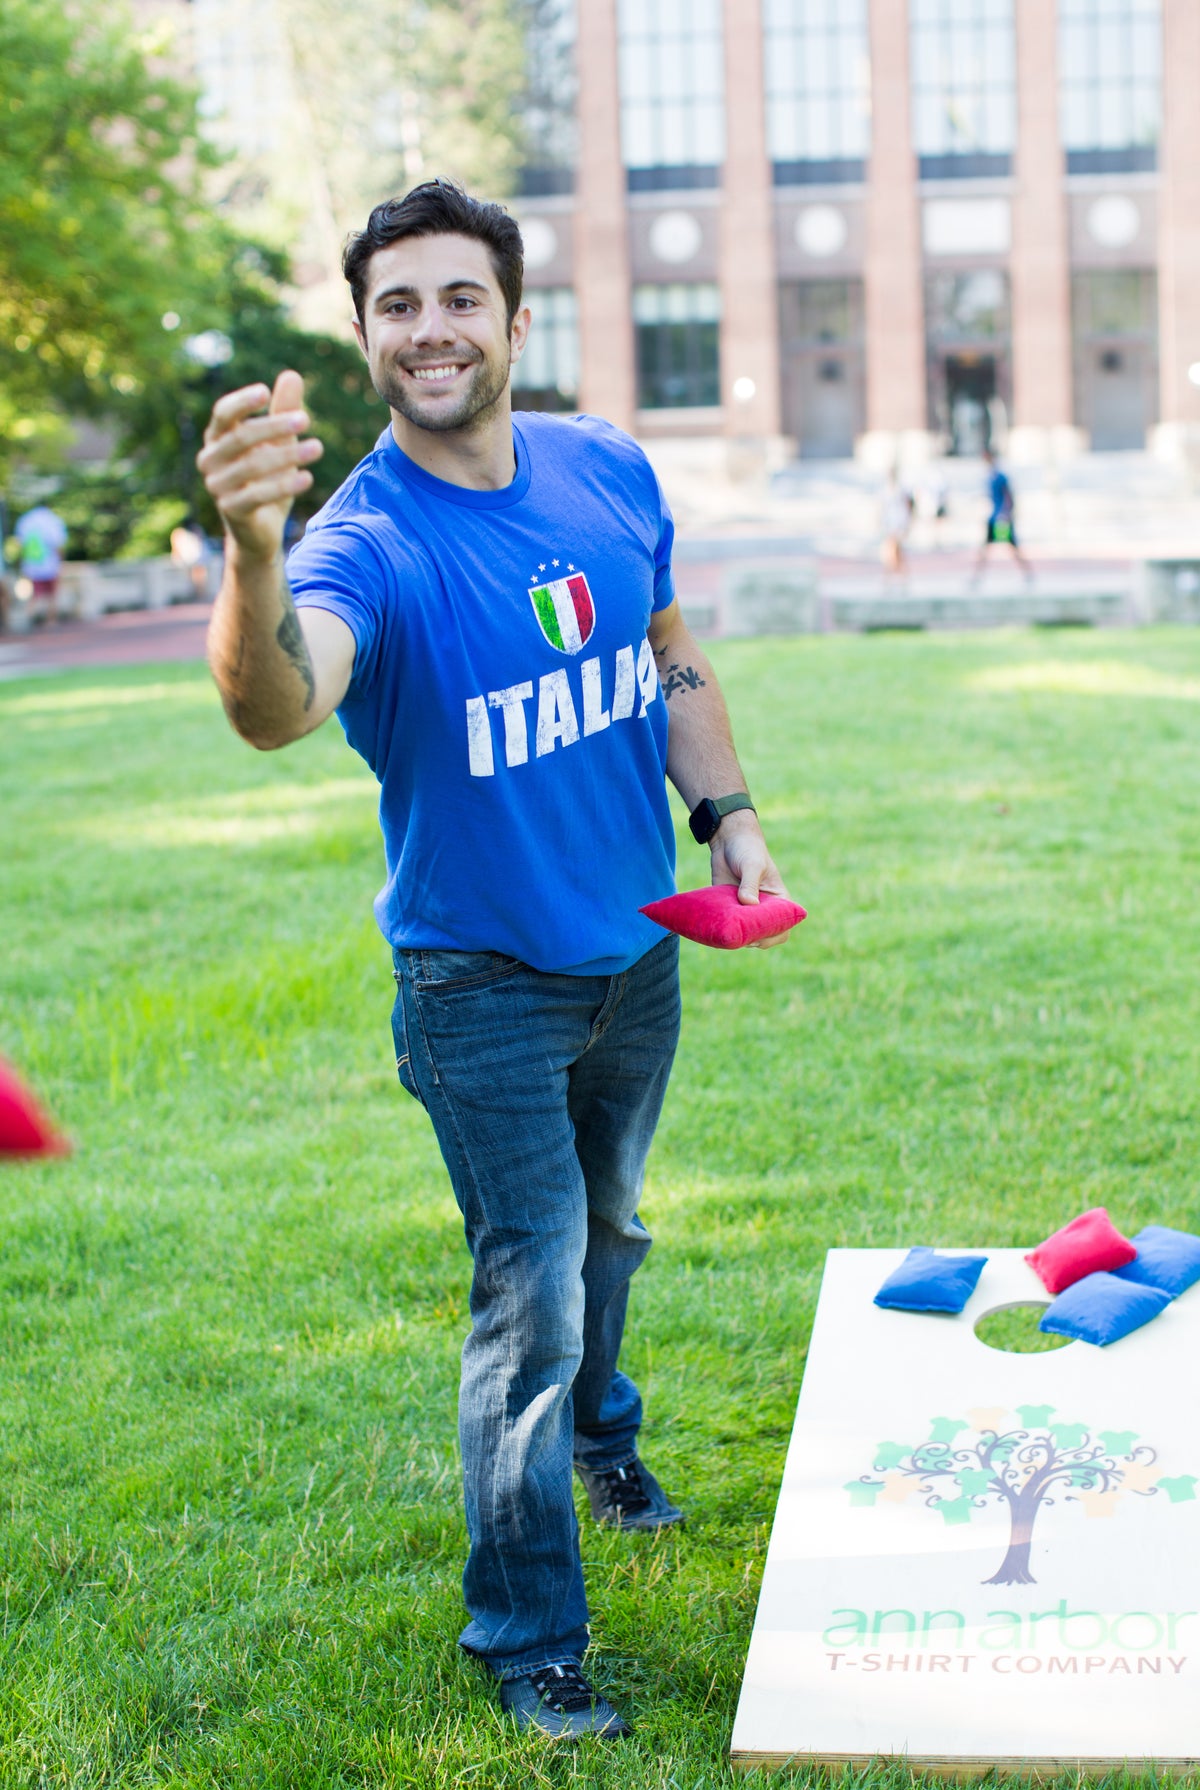 ITALIA | Italy Azzurri Futbol (Italian National Soccer) Vintage-Look T-shirt